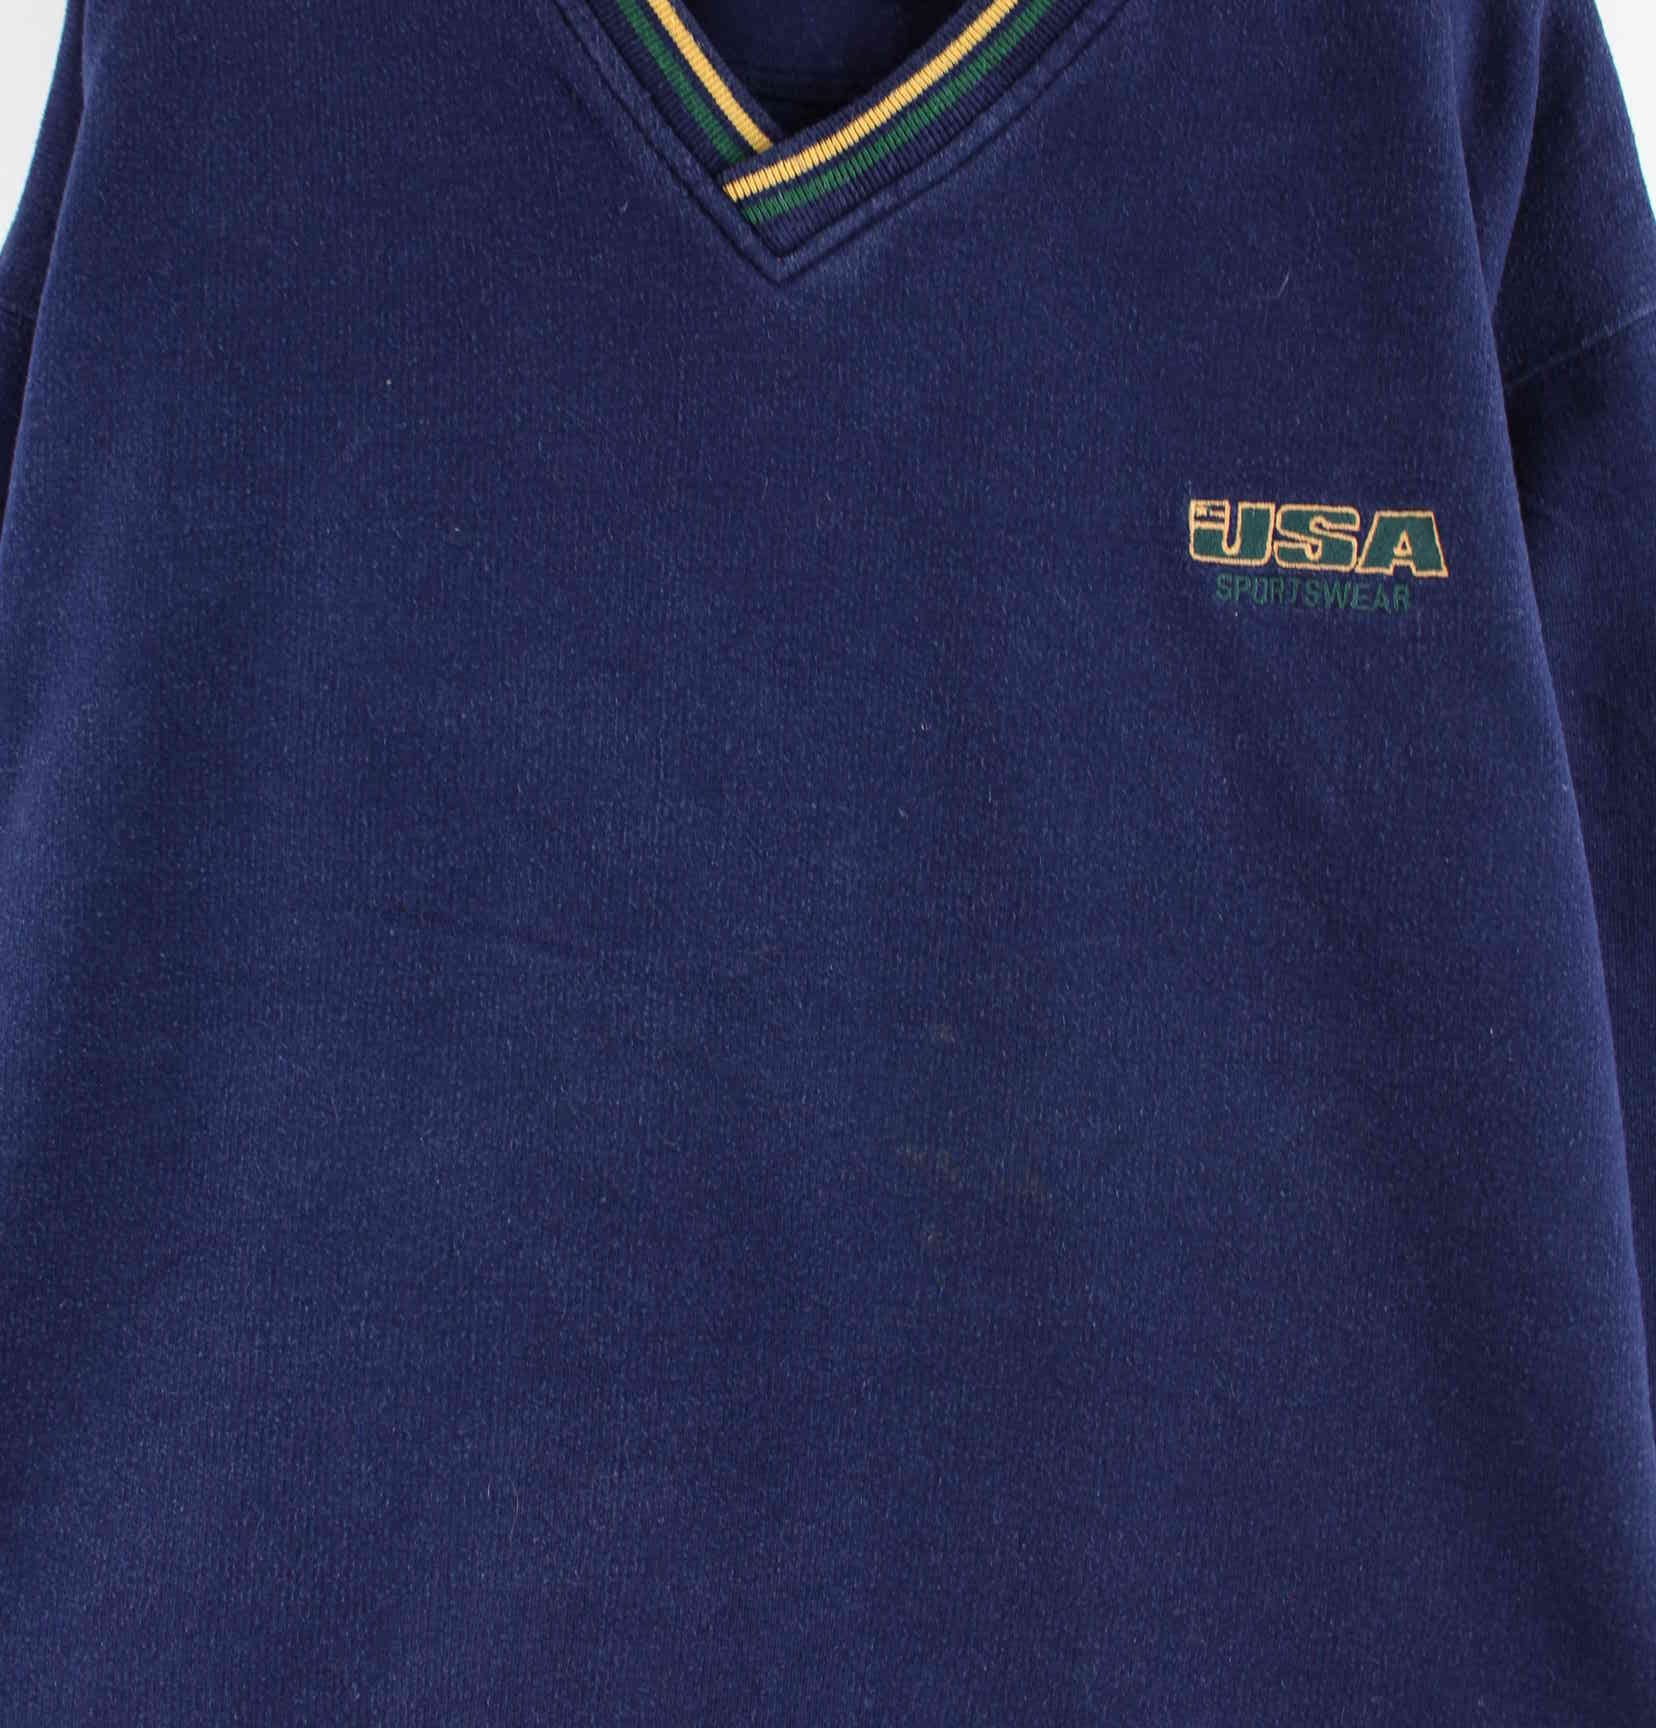 Vintage 90s USA Sportswear V-Neck Sweater Blau L (detail image 1)